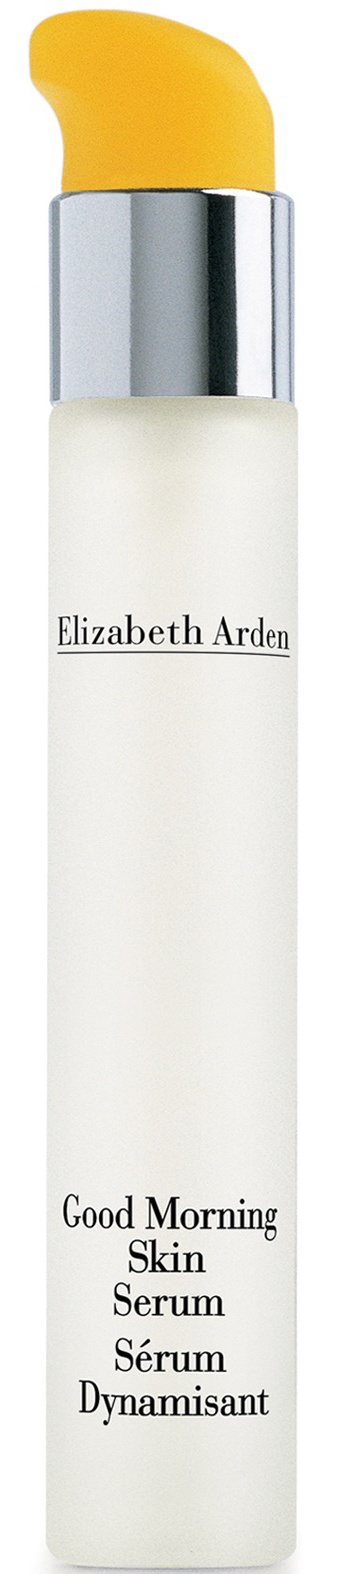 Elizabeth Arden Good Morning Skin Serum